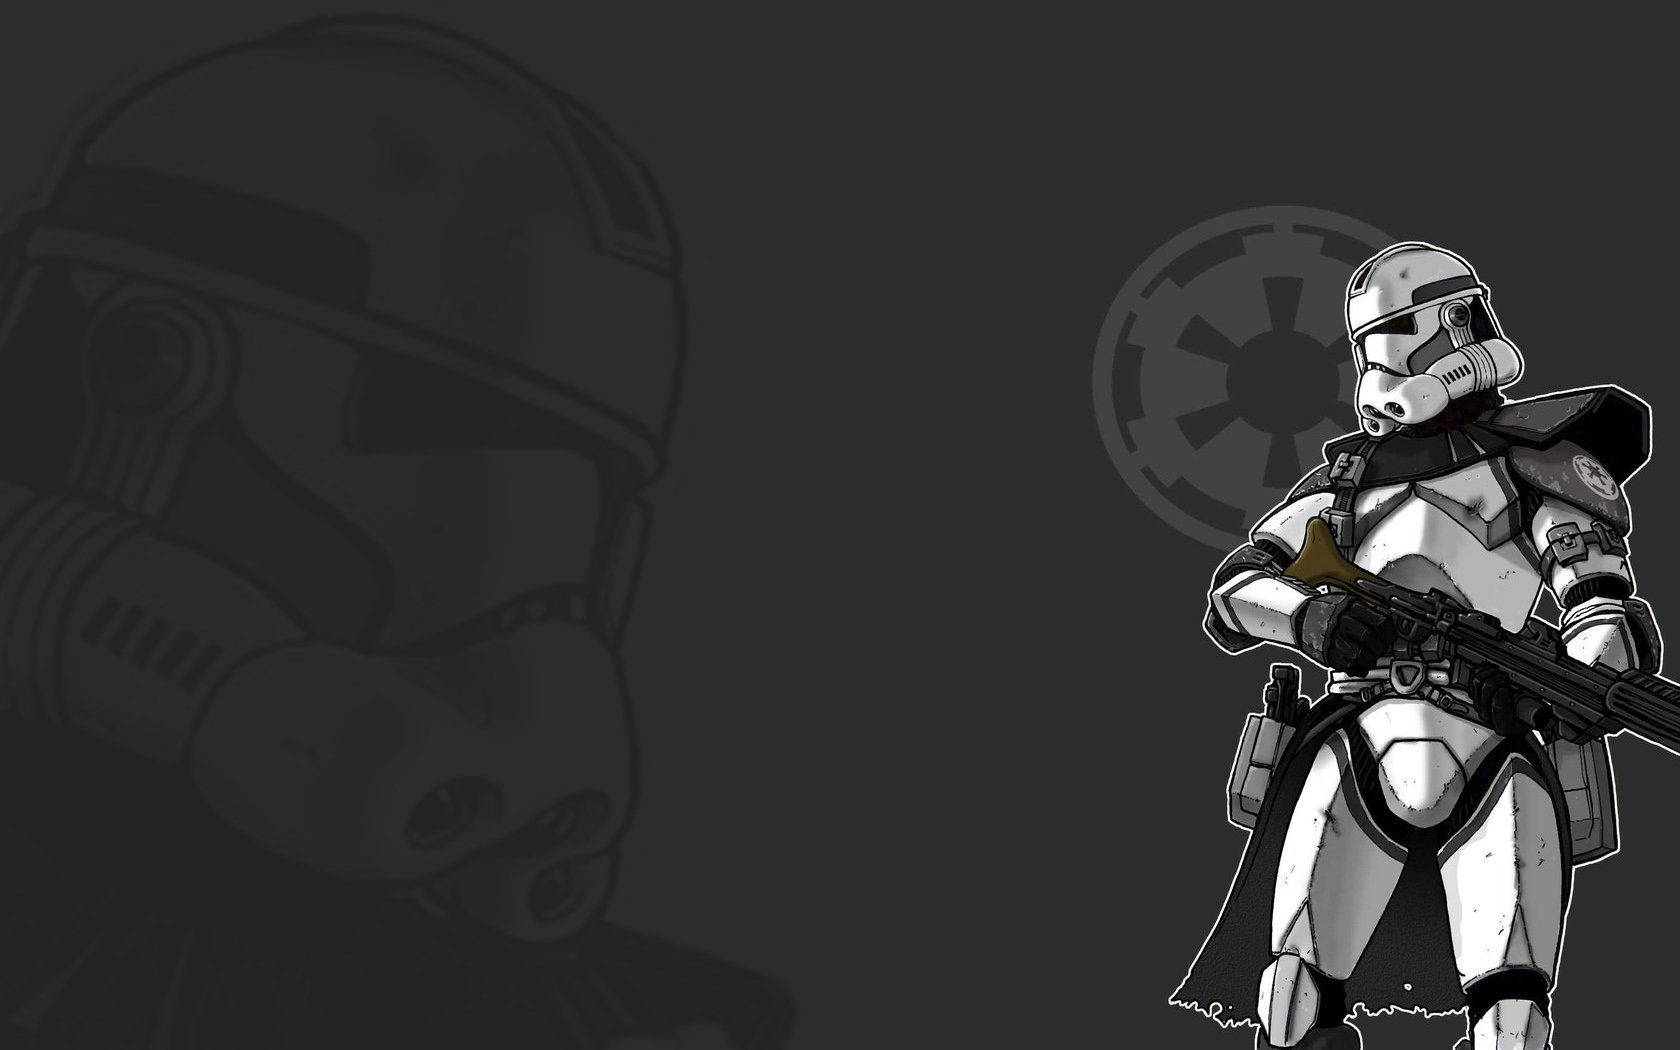 Stormtrooper Watermark Cover